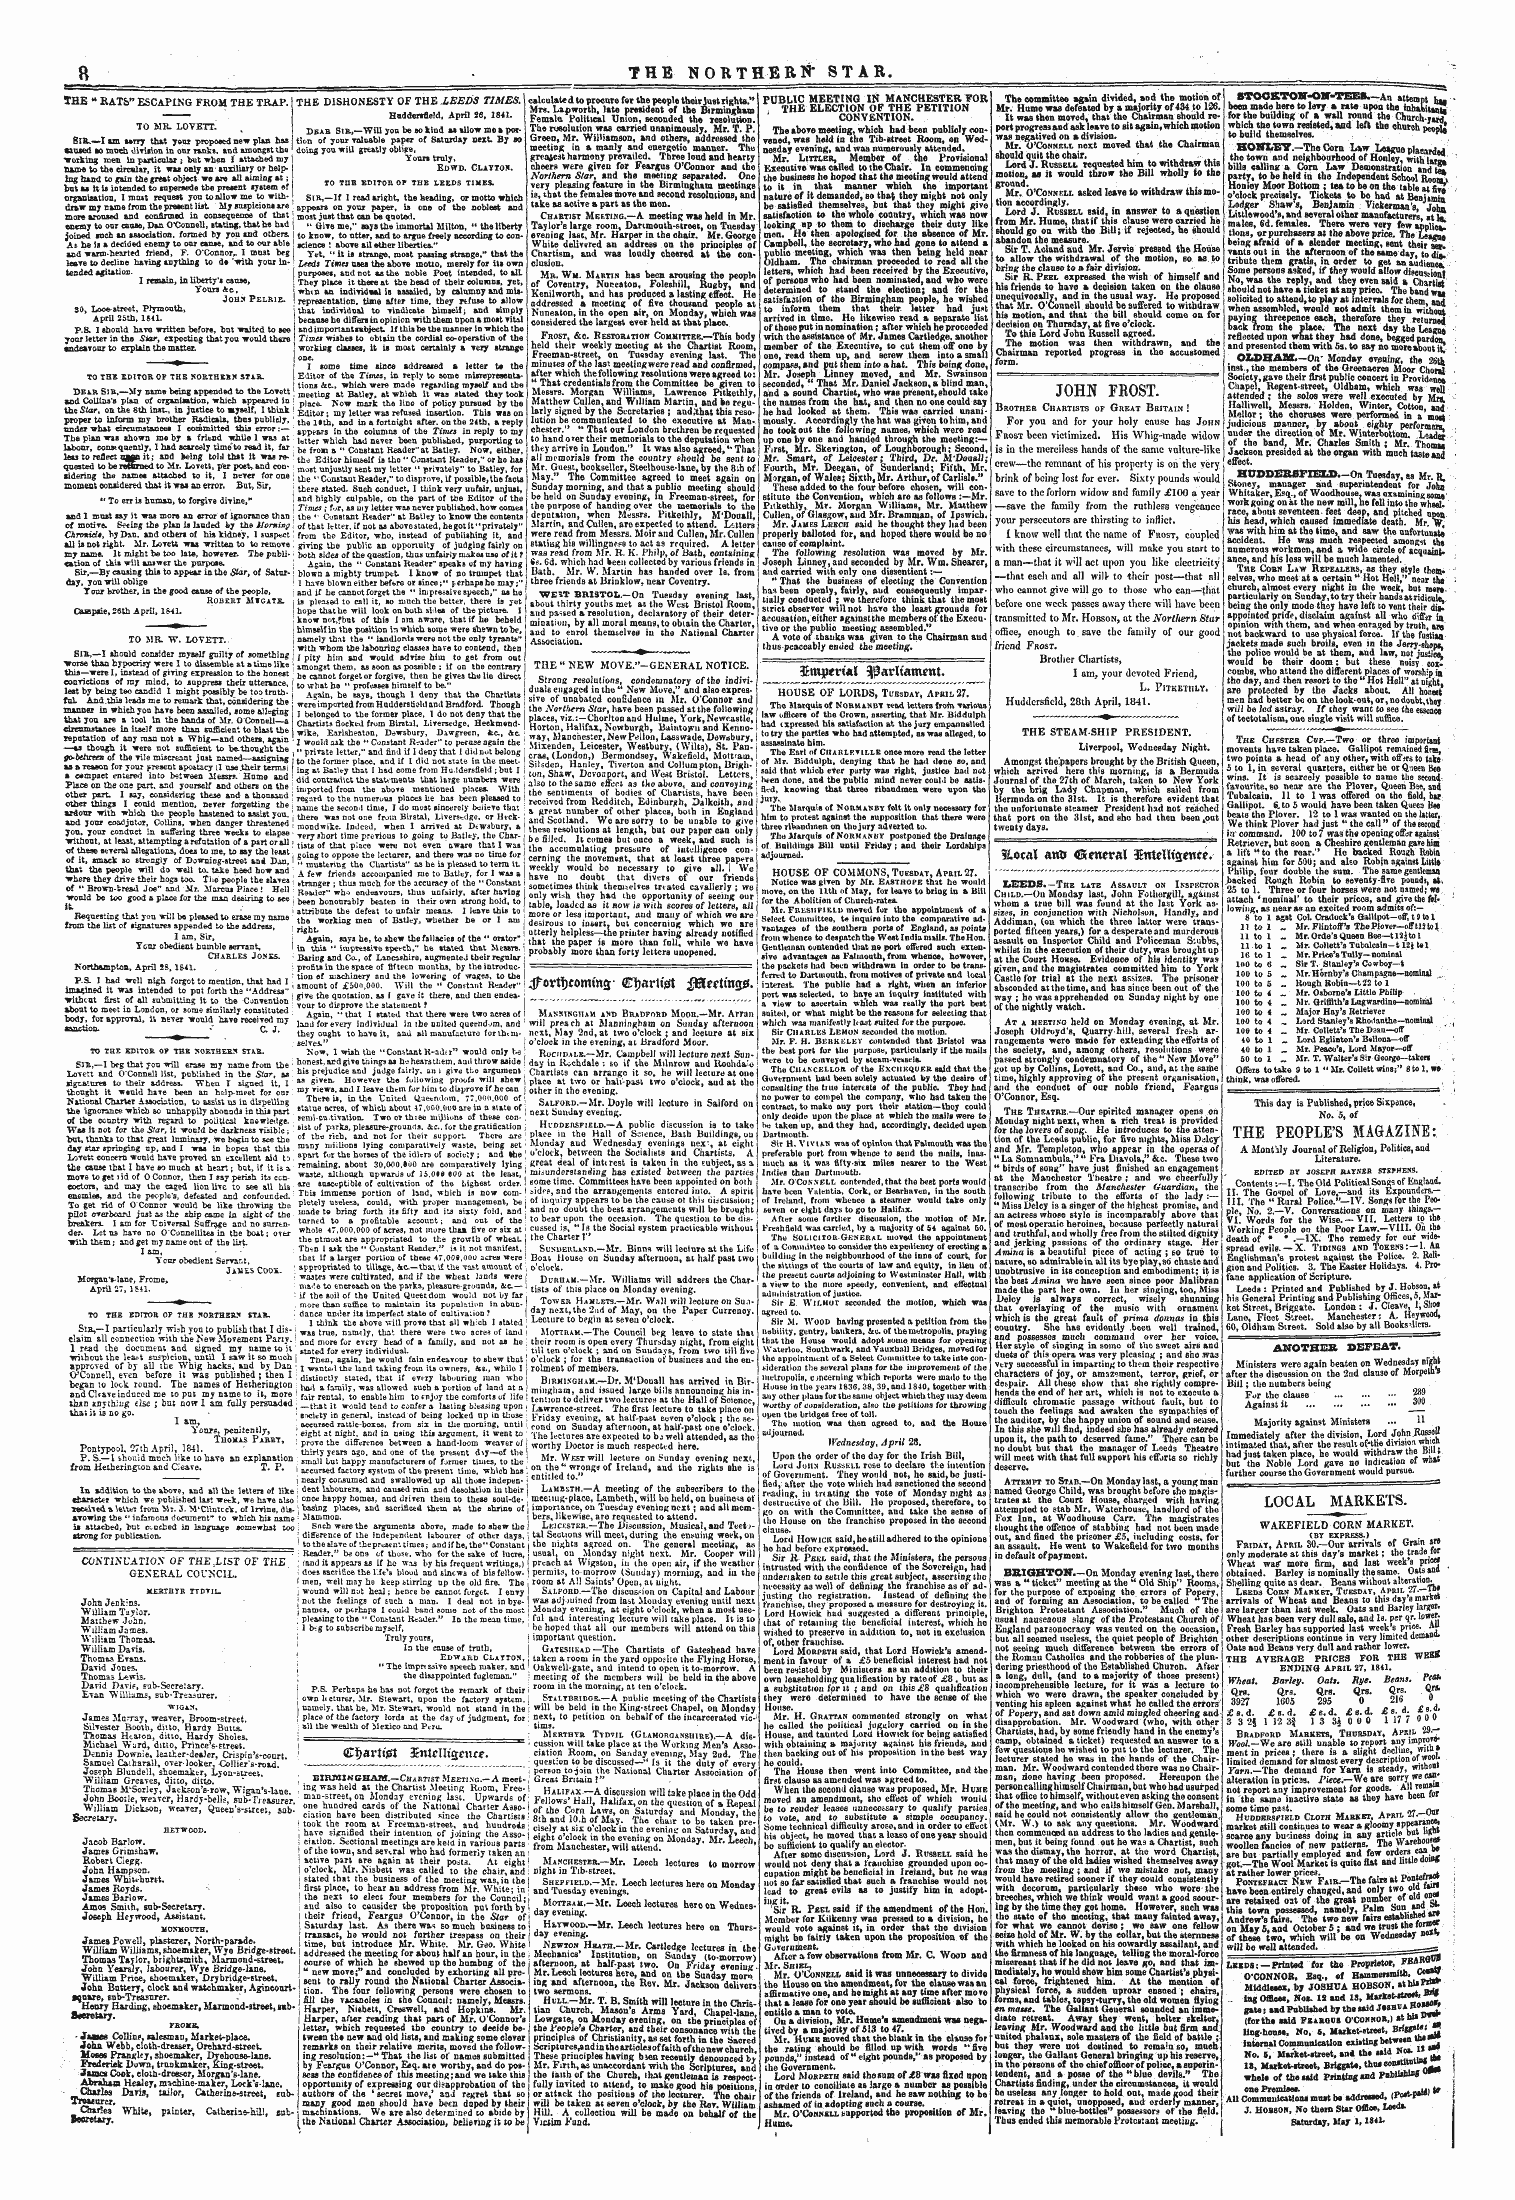 Northern Star (1837-1852): jS F Y, 3rd edition - 3emt&Gt;Ertal 33avuamcut